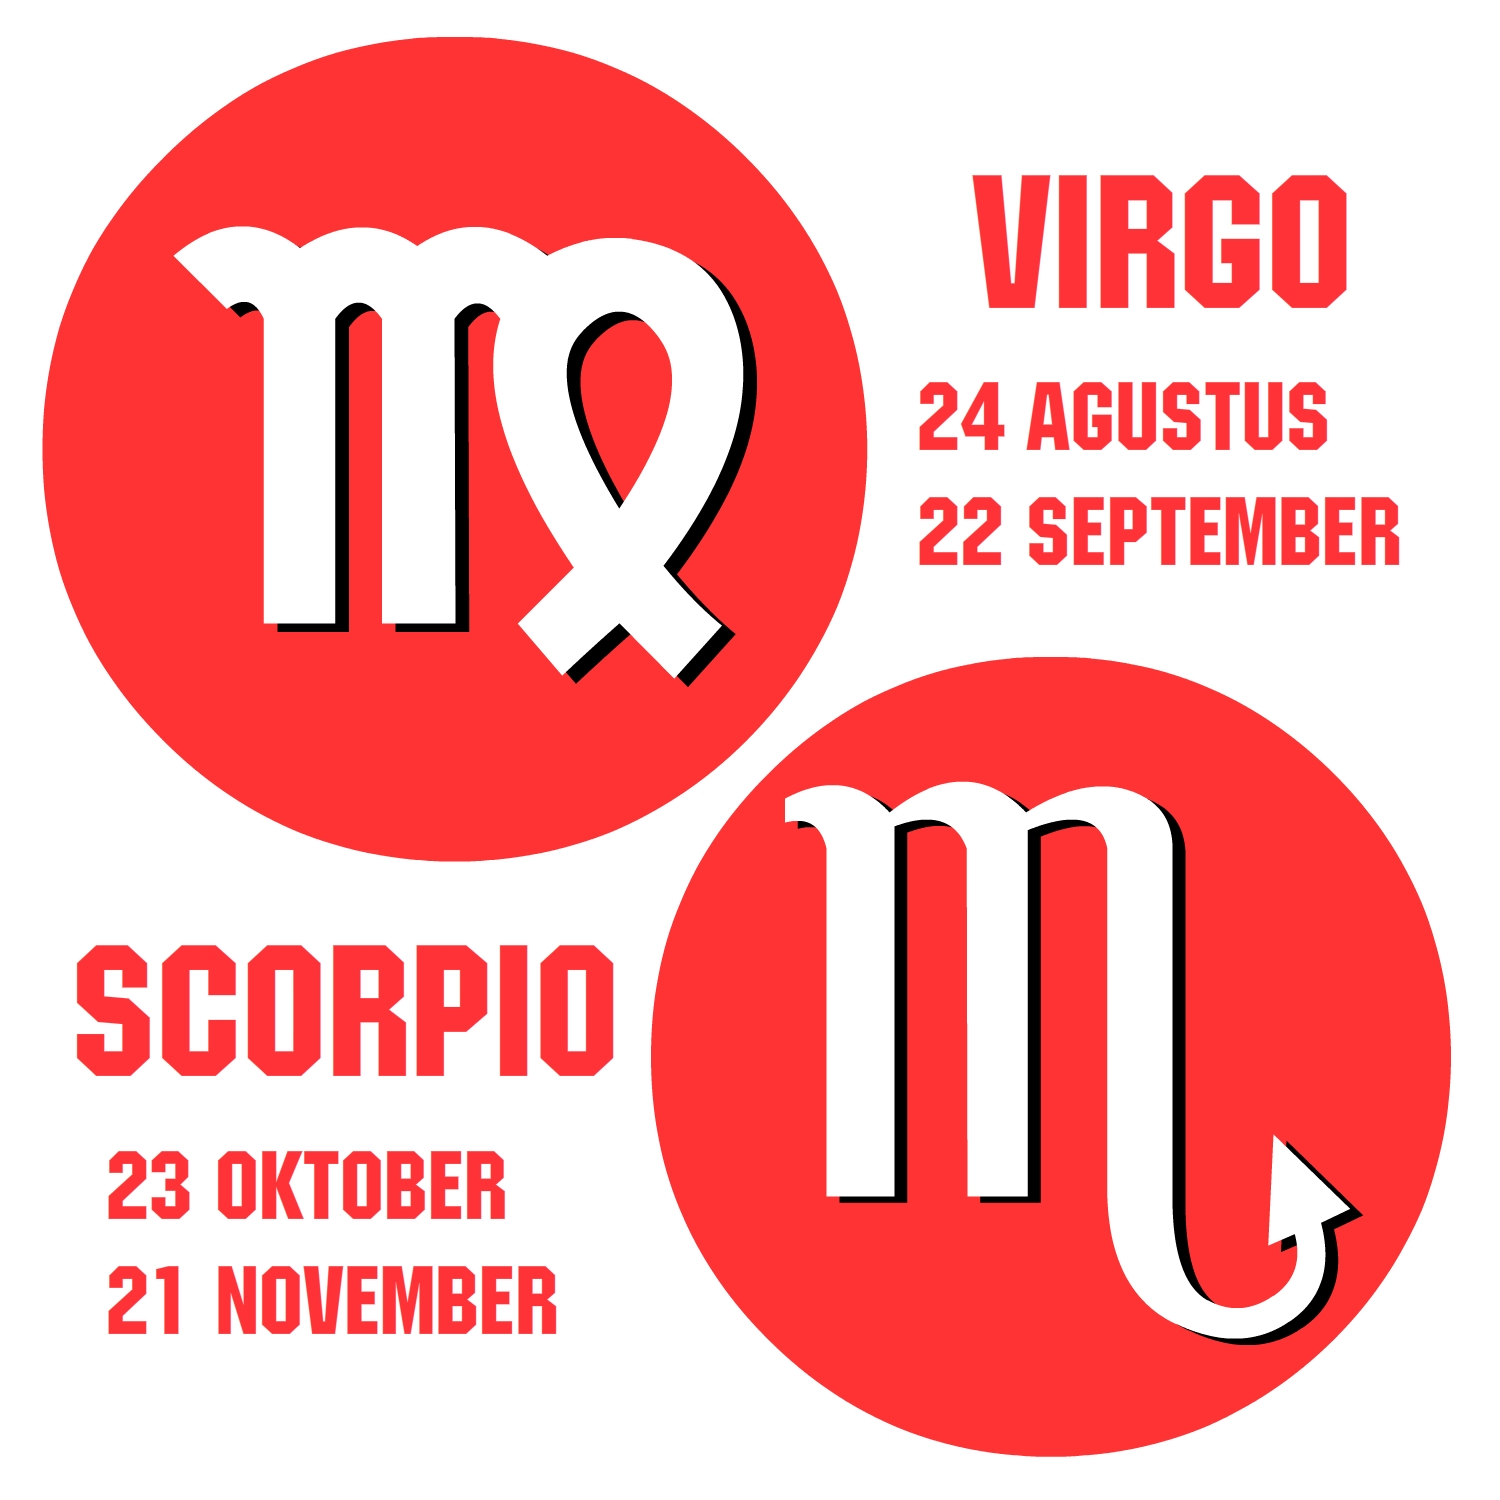 Gambar Agustus 2015 Virgo Scorpio Gambar Kata Zodiak Di Rebanas